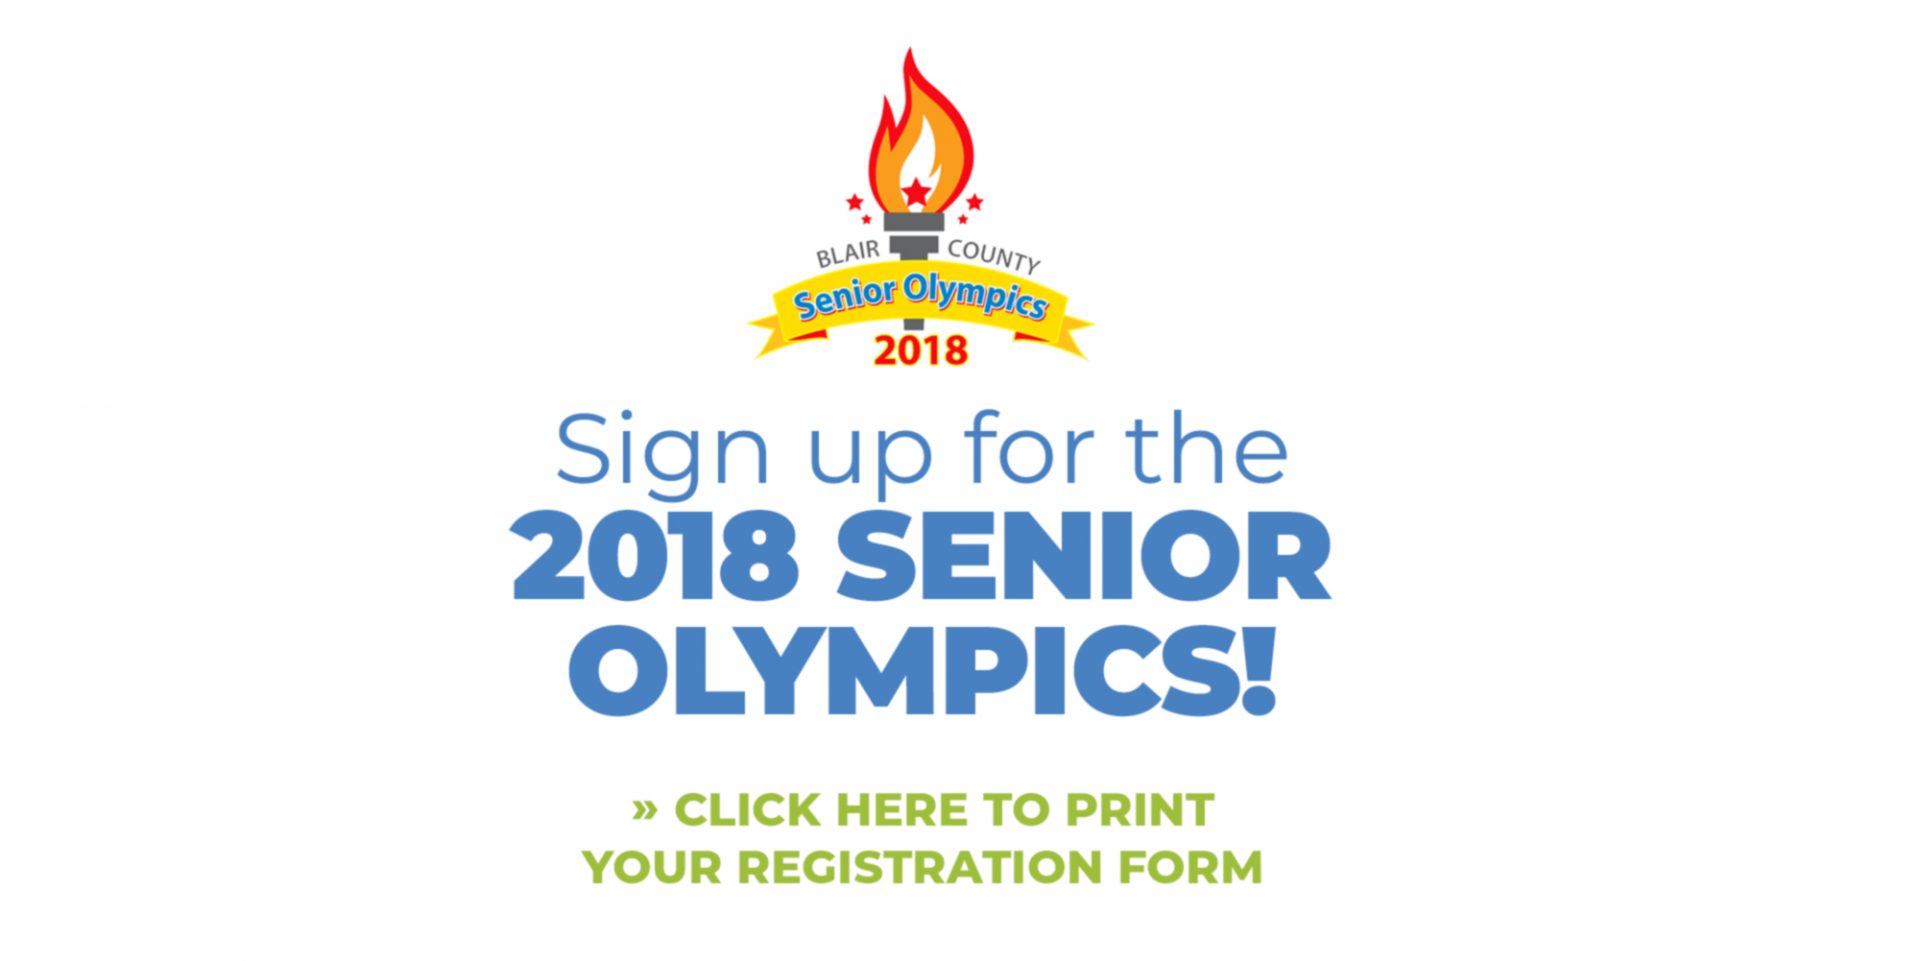 Sign up for the 2018 Senior Olympics! Blair Senior Services